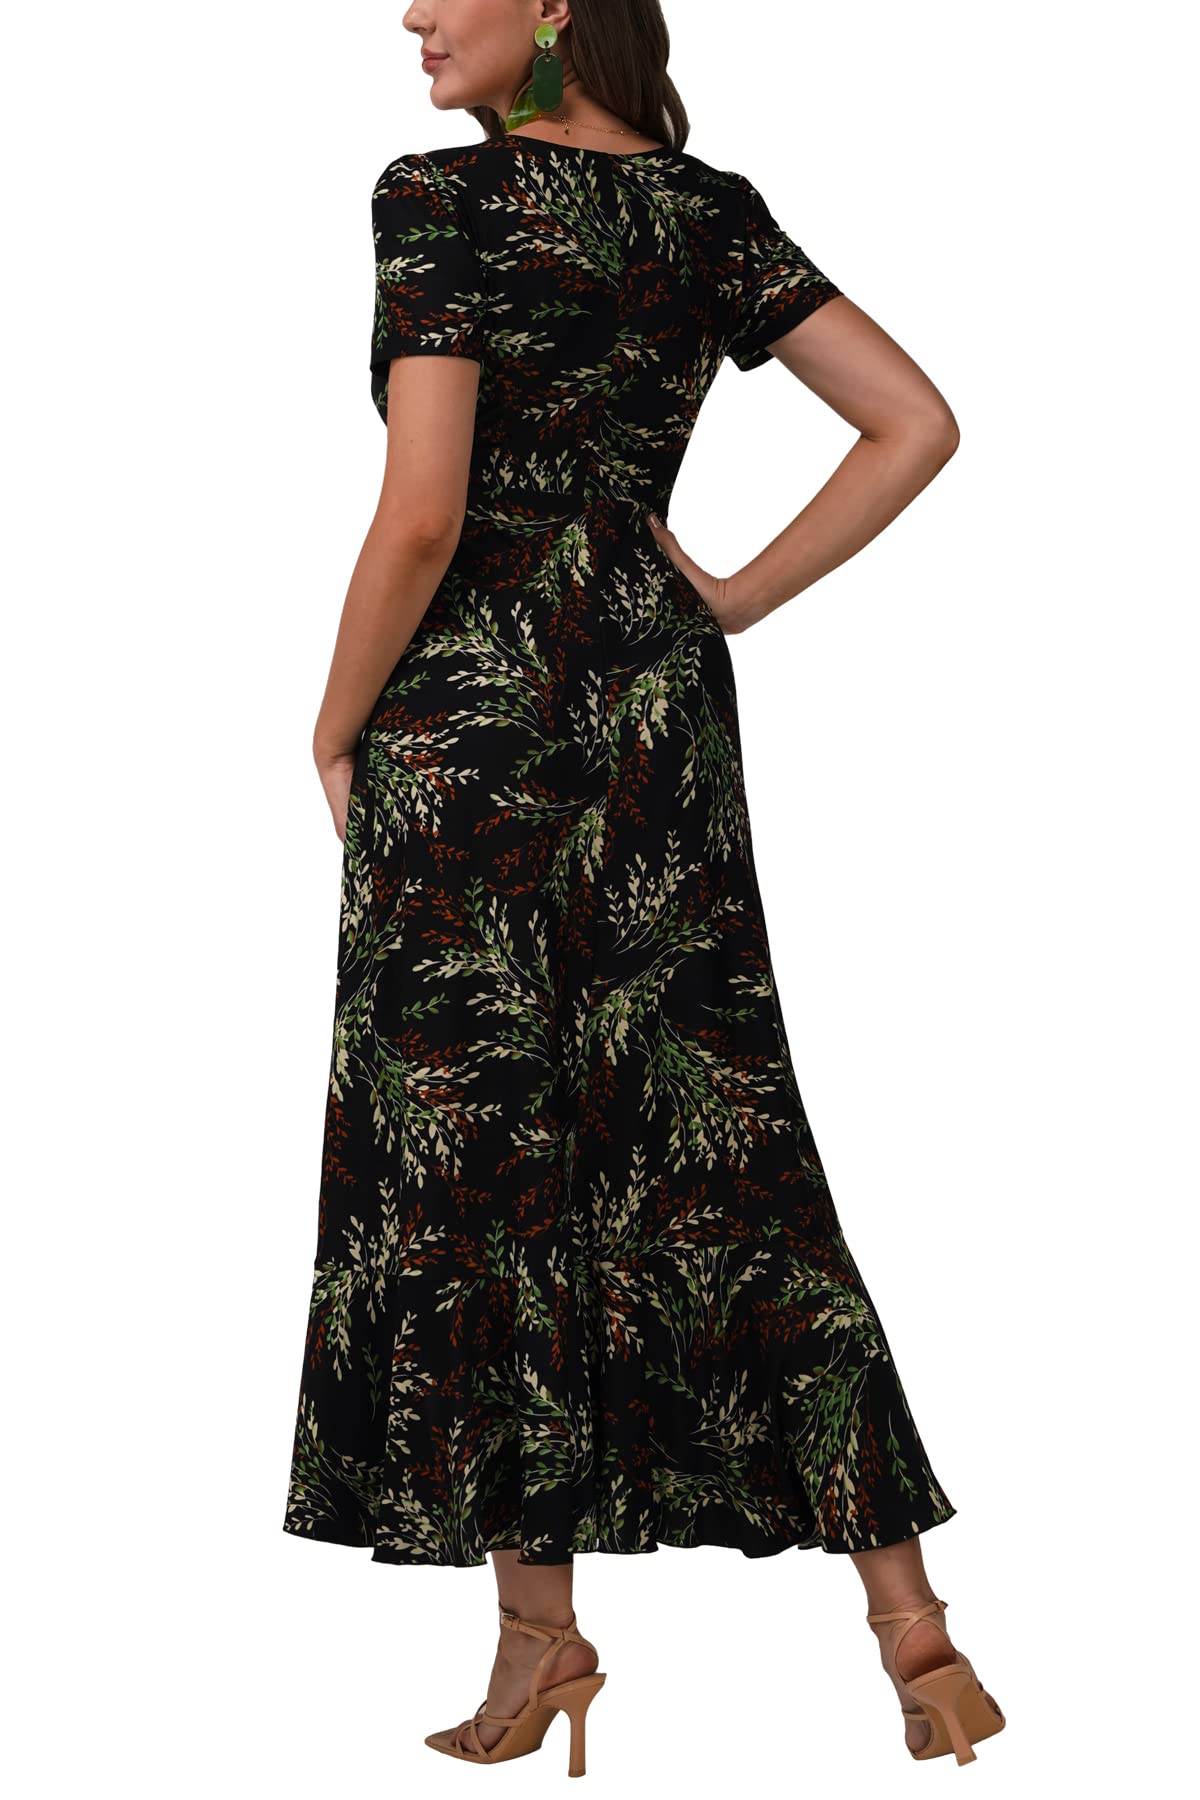 BAISHENGGT Womens Summer Short Sleeve Wrap V Neck Dress Black Floral Print Ruffle Hem Bohemian Flowy Long Maxi Dresses